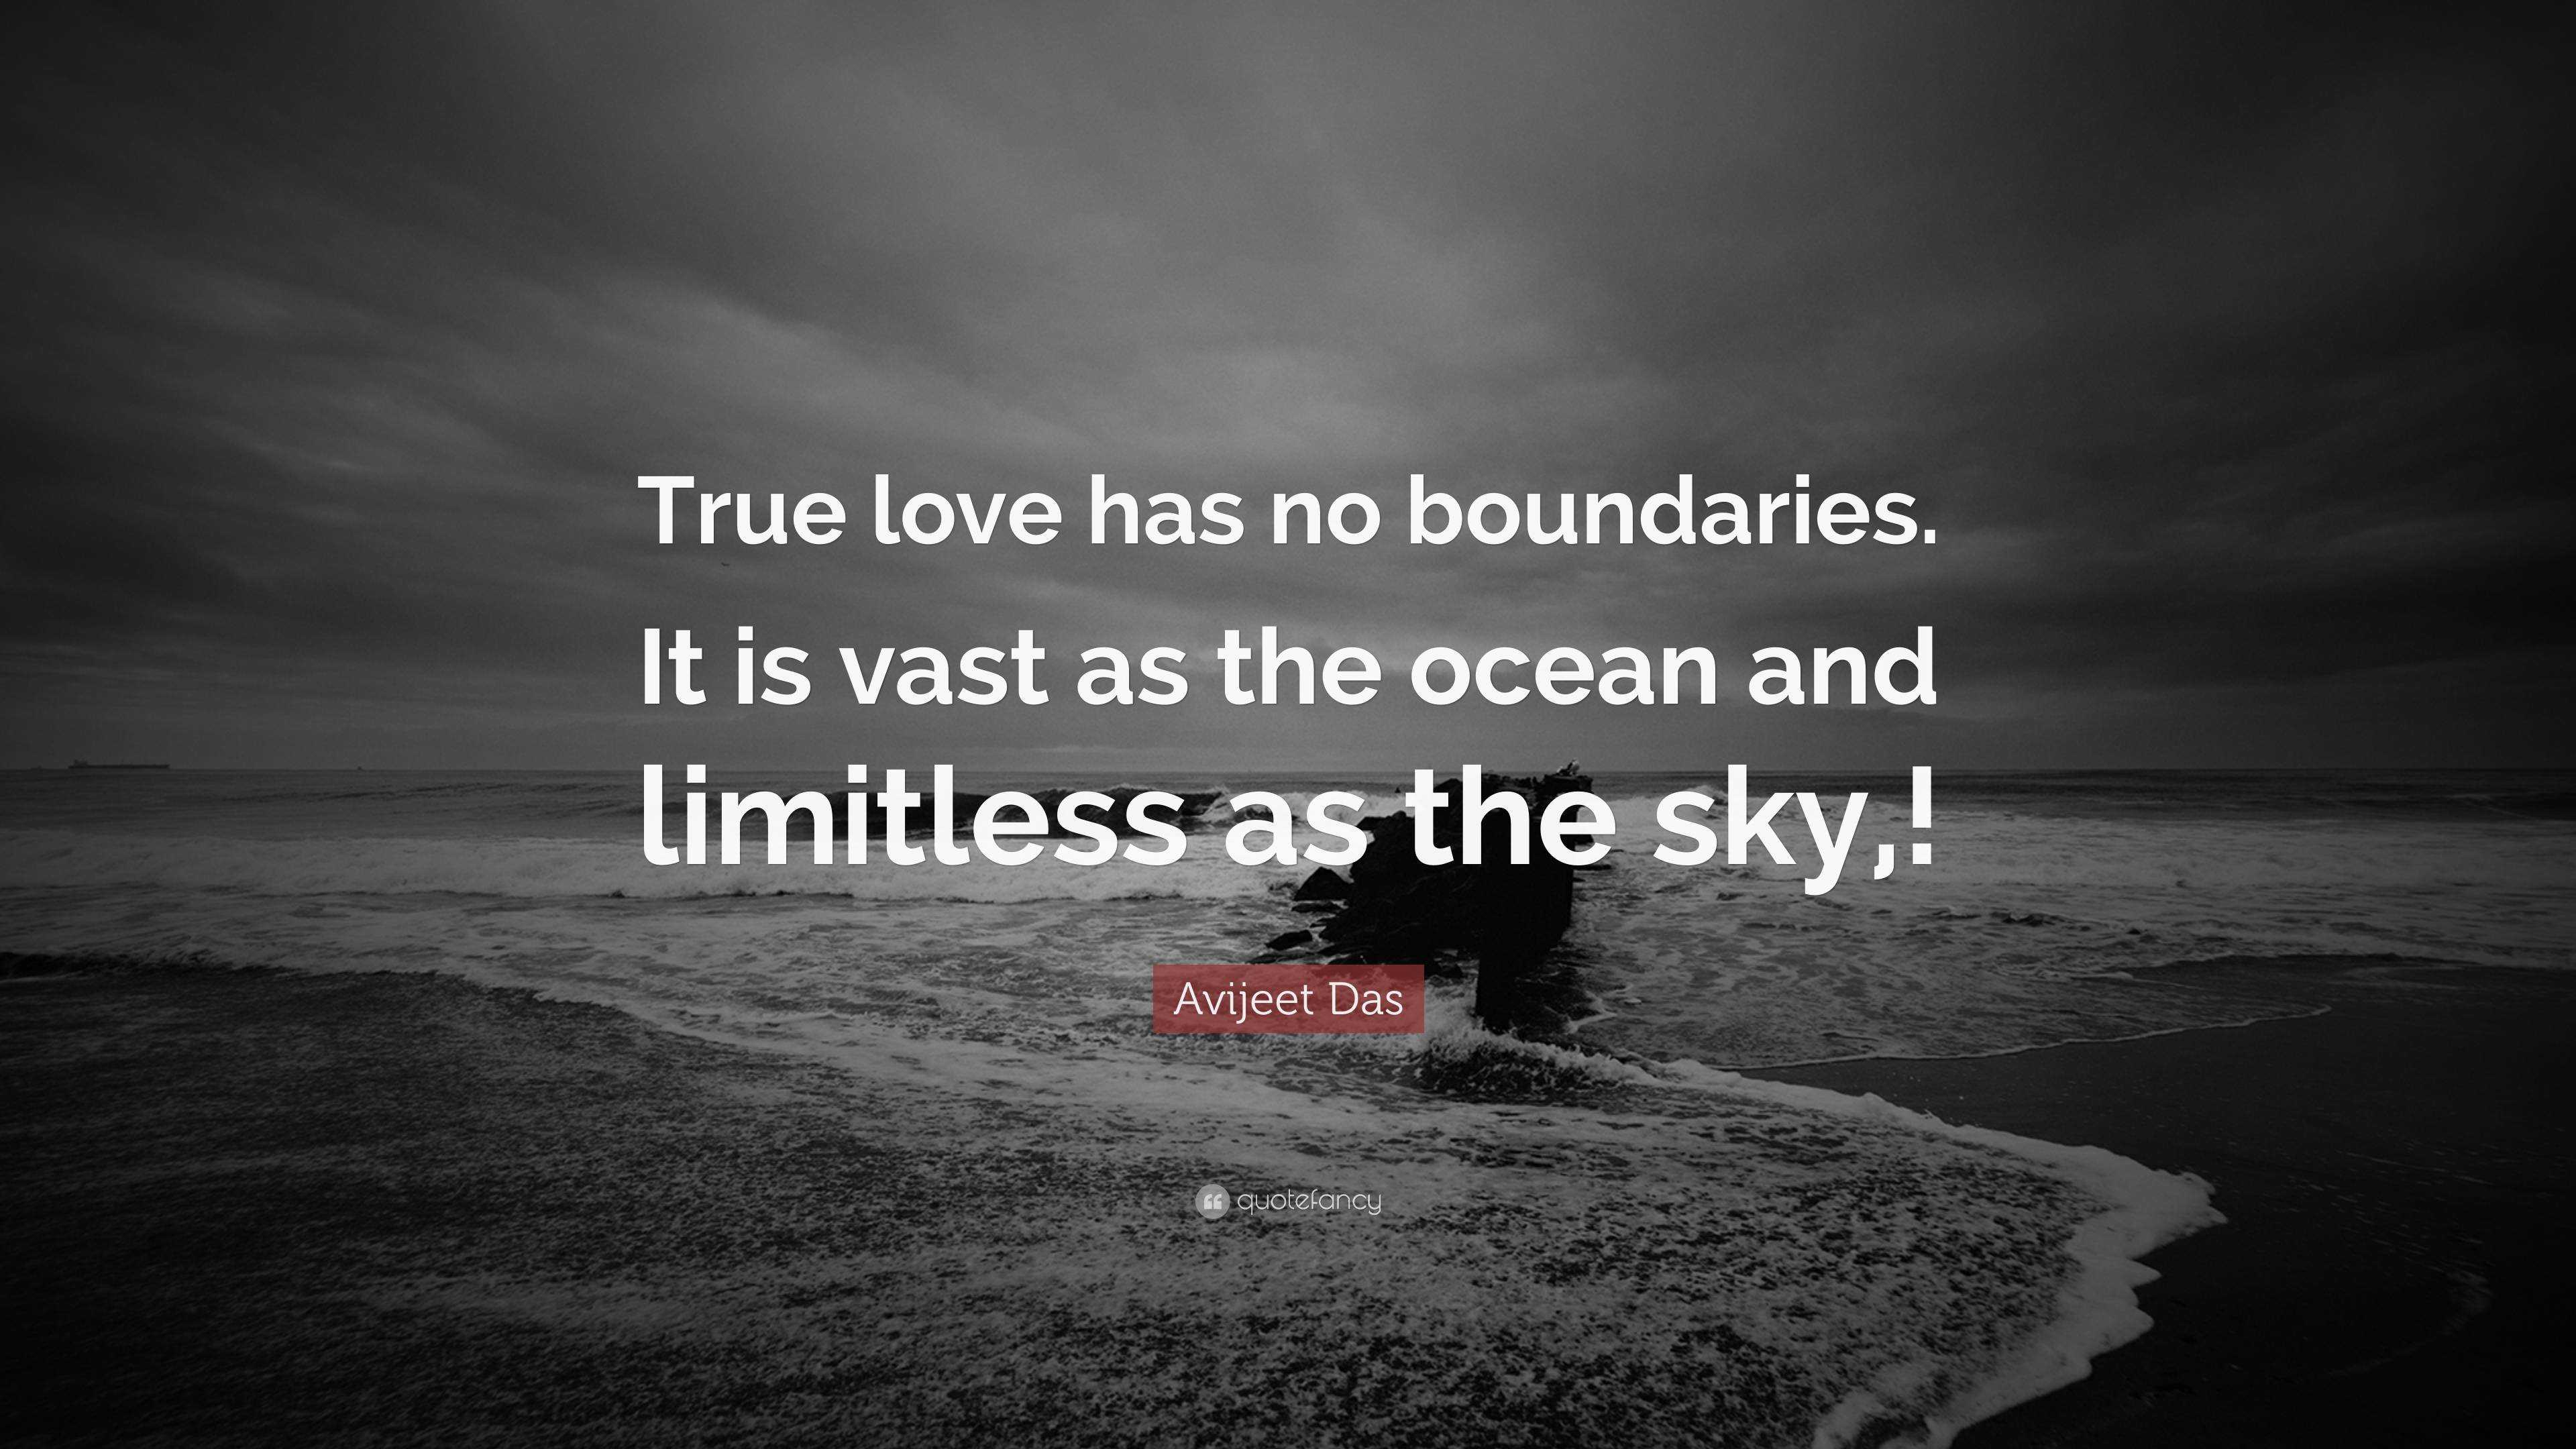 Avijeet Das Quote: “True love has no boundaries. It is vast as the